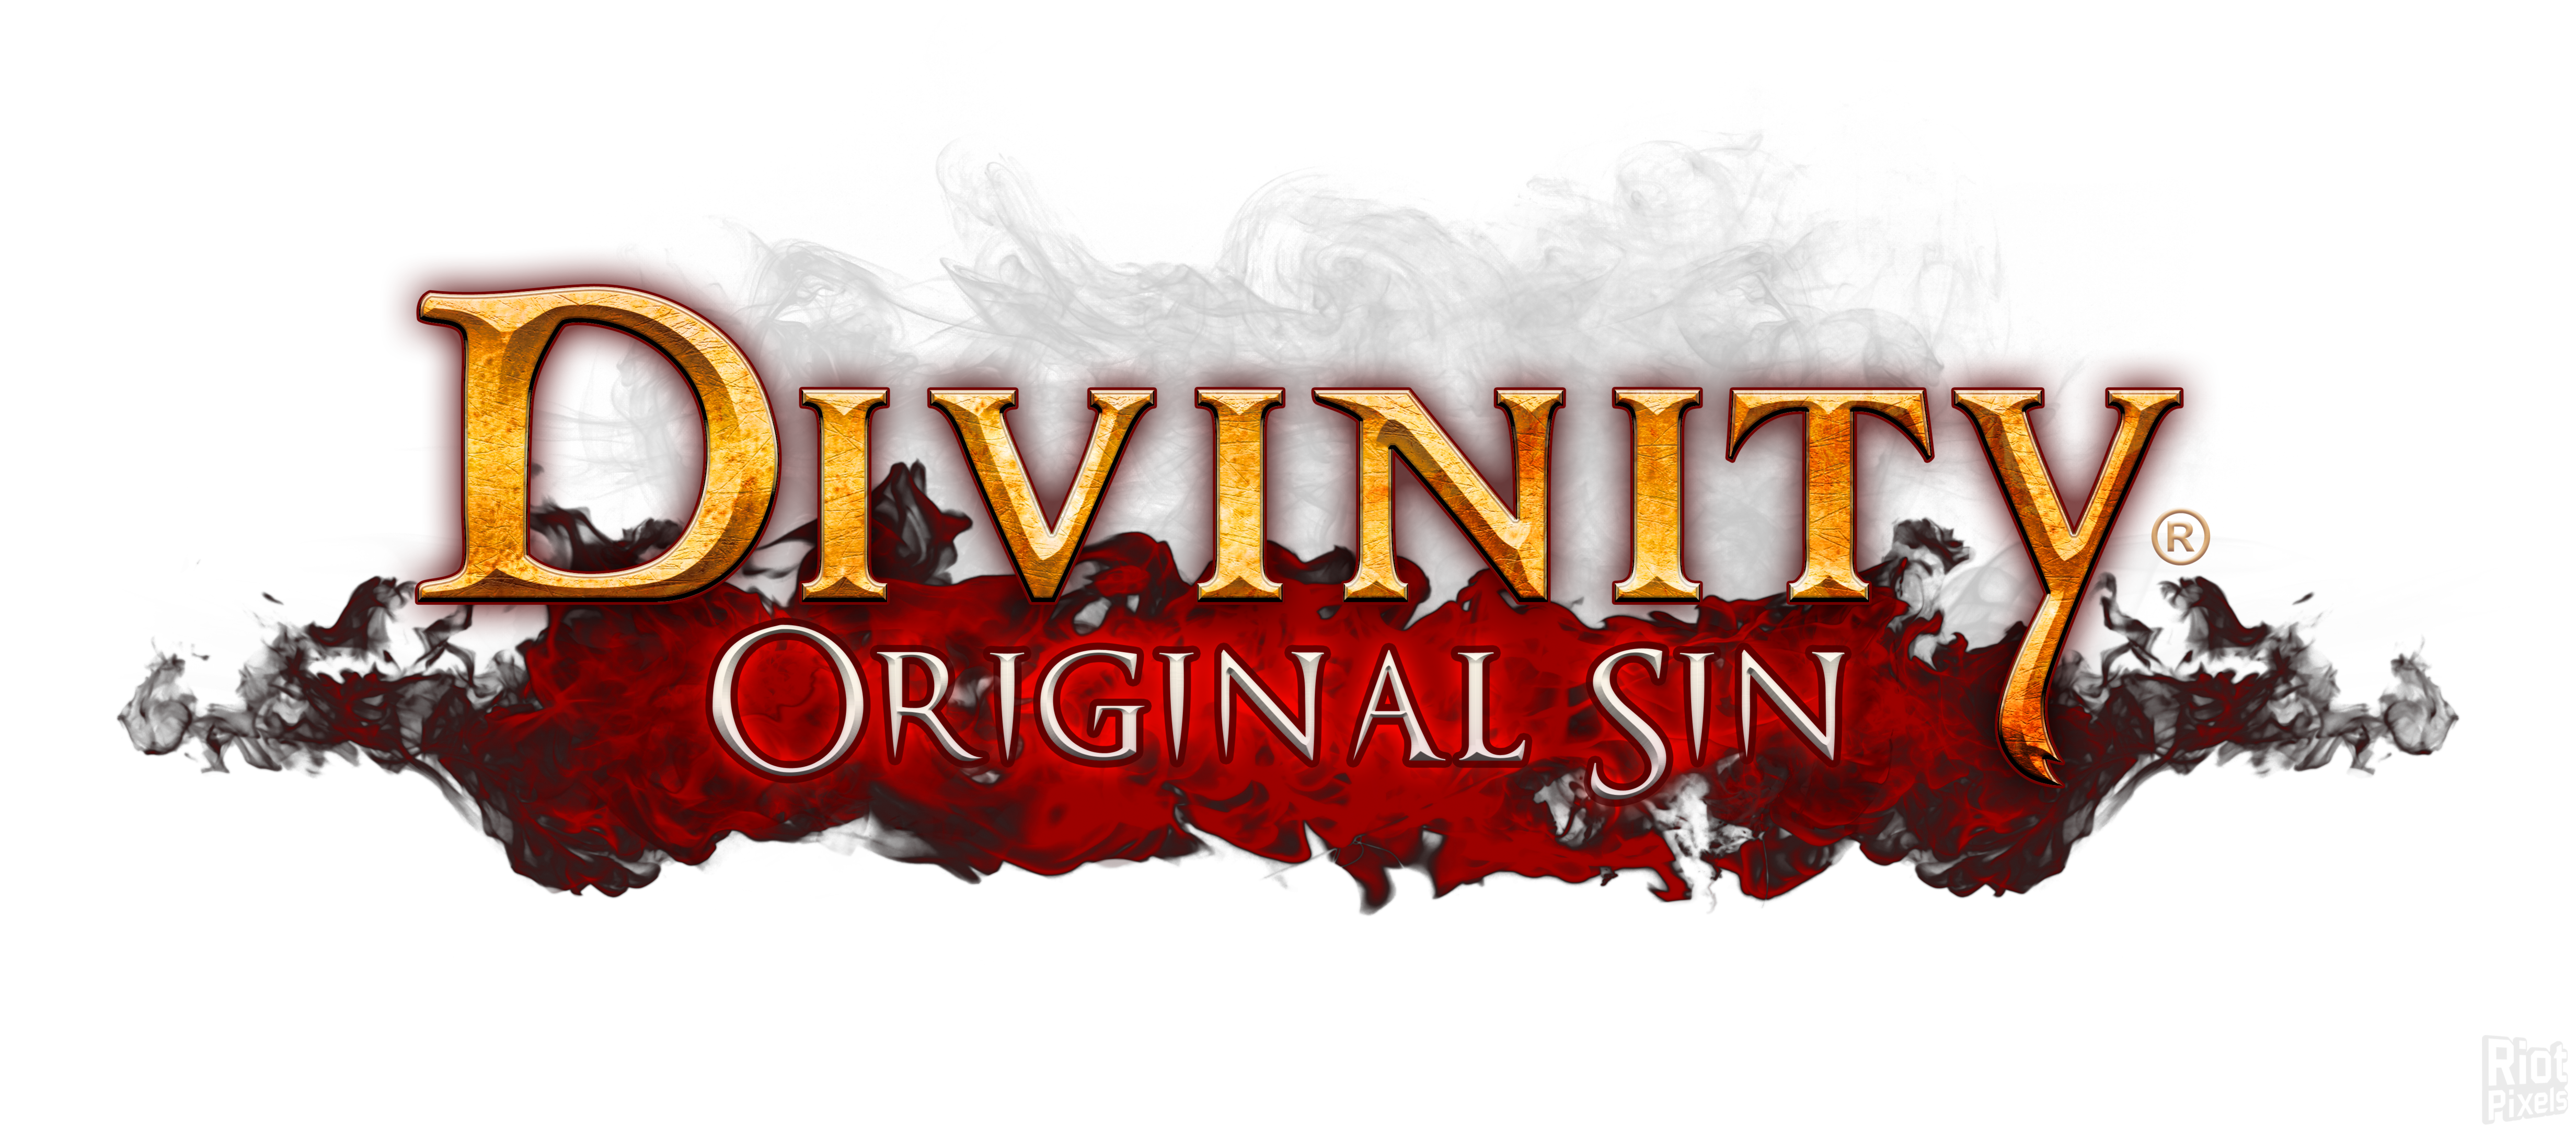 Divinity Original Sin Png - Divinity Original Sin Png Hdpng.com 4928, Transparent background PNG HD thumbnail